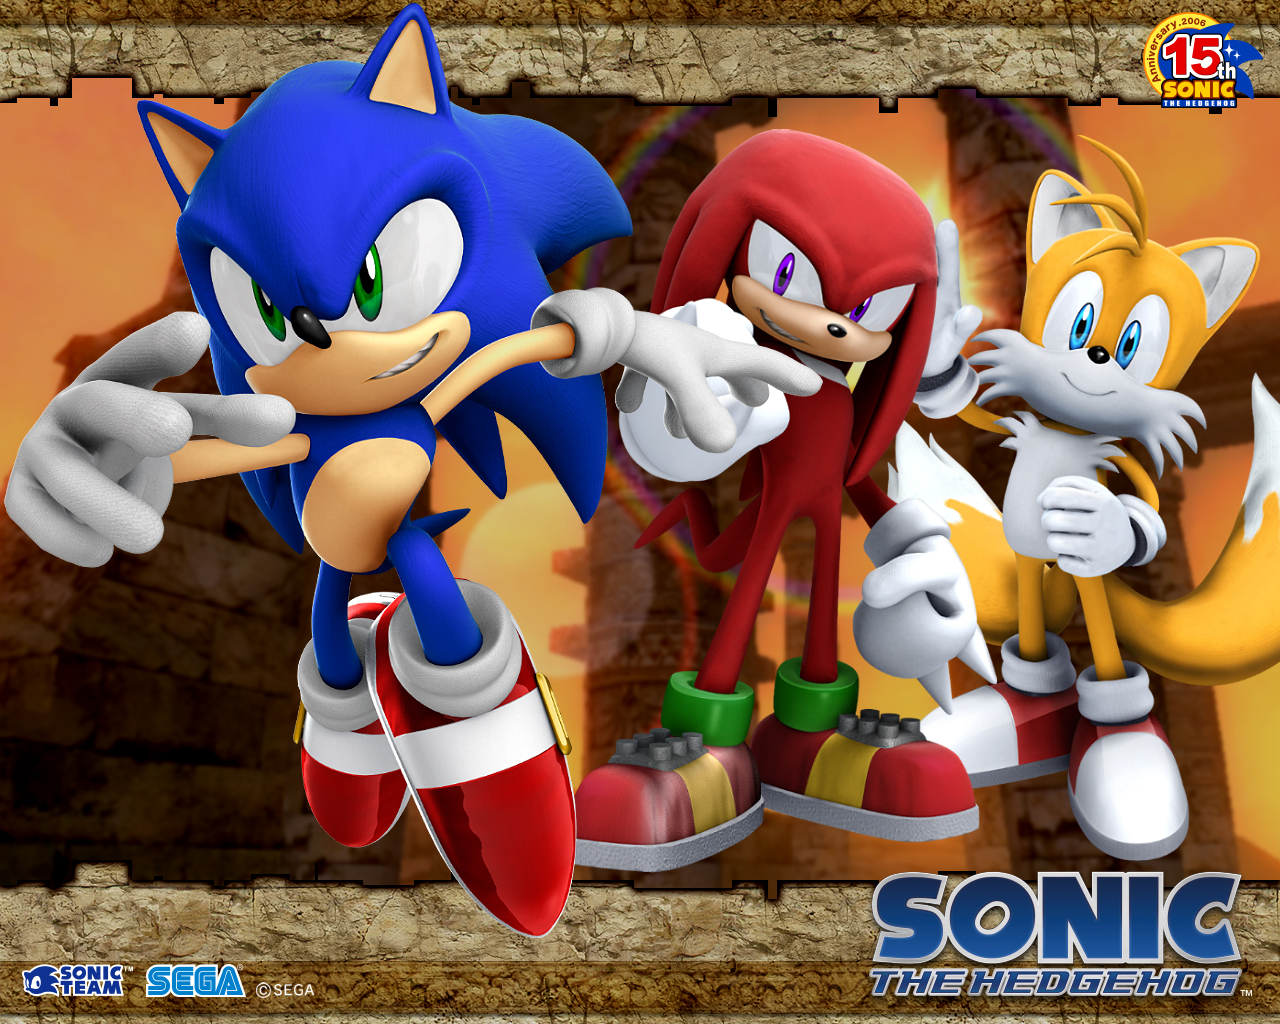 Team Sonic the Hedgehog Anime